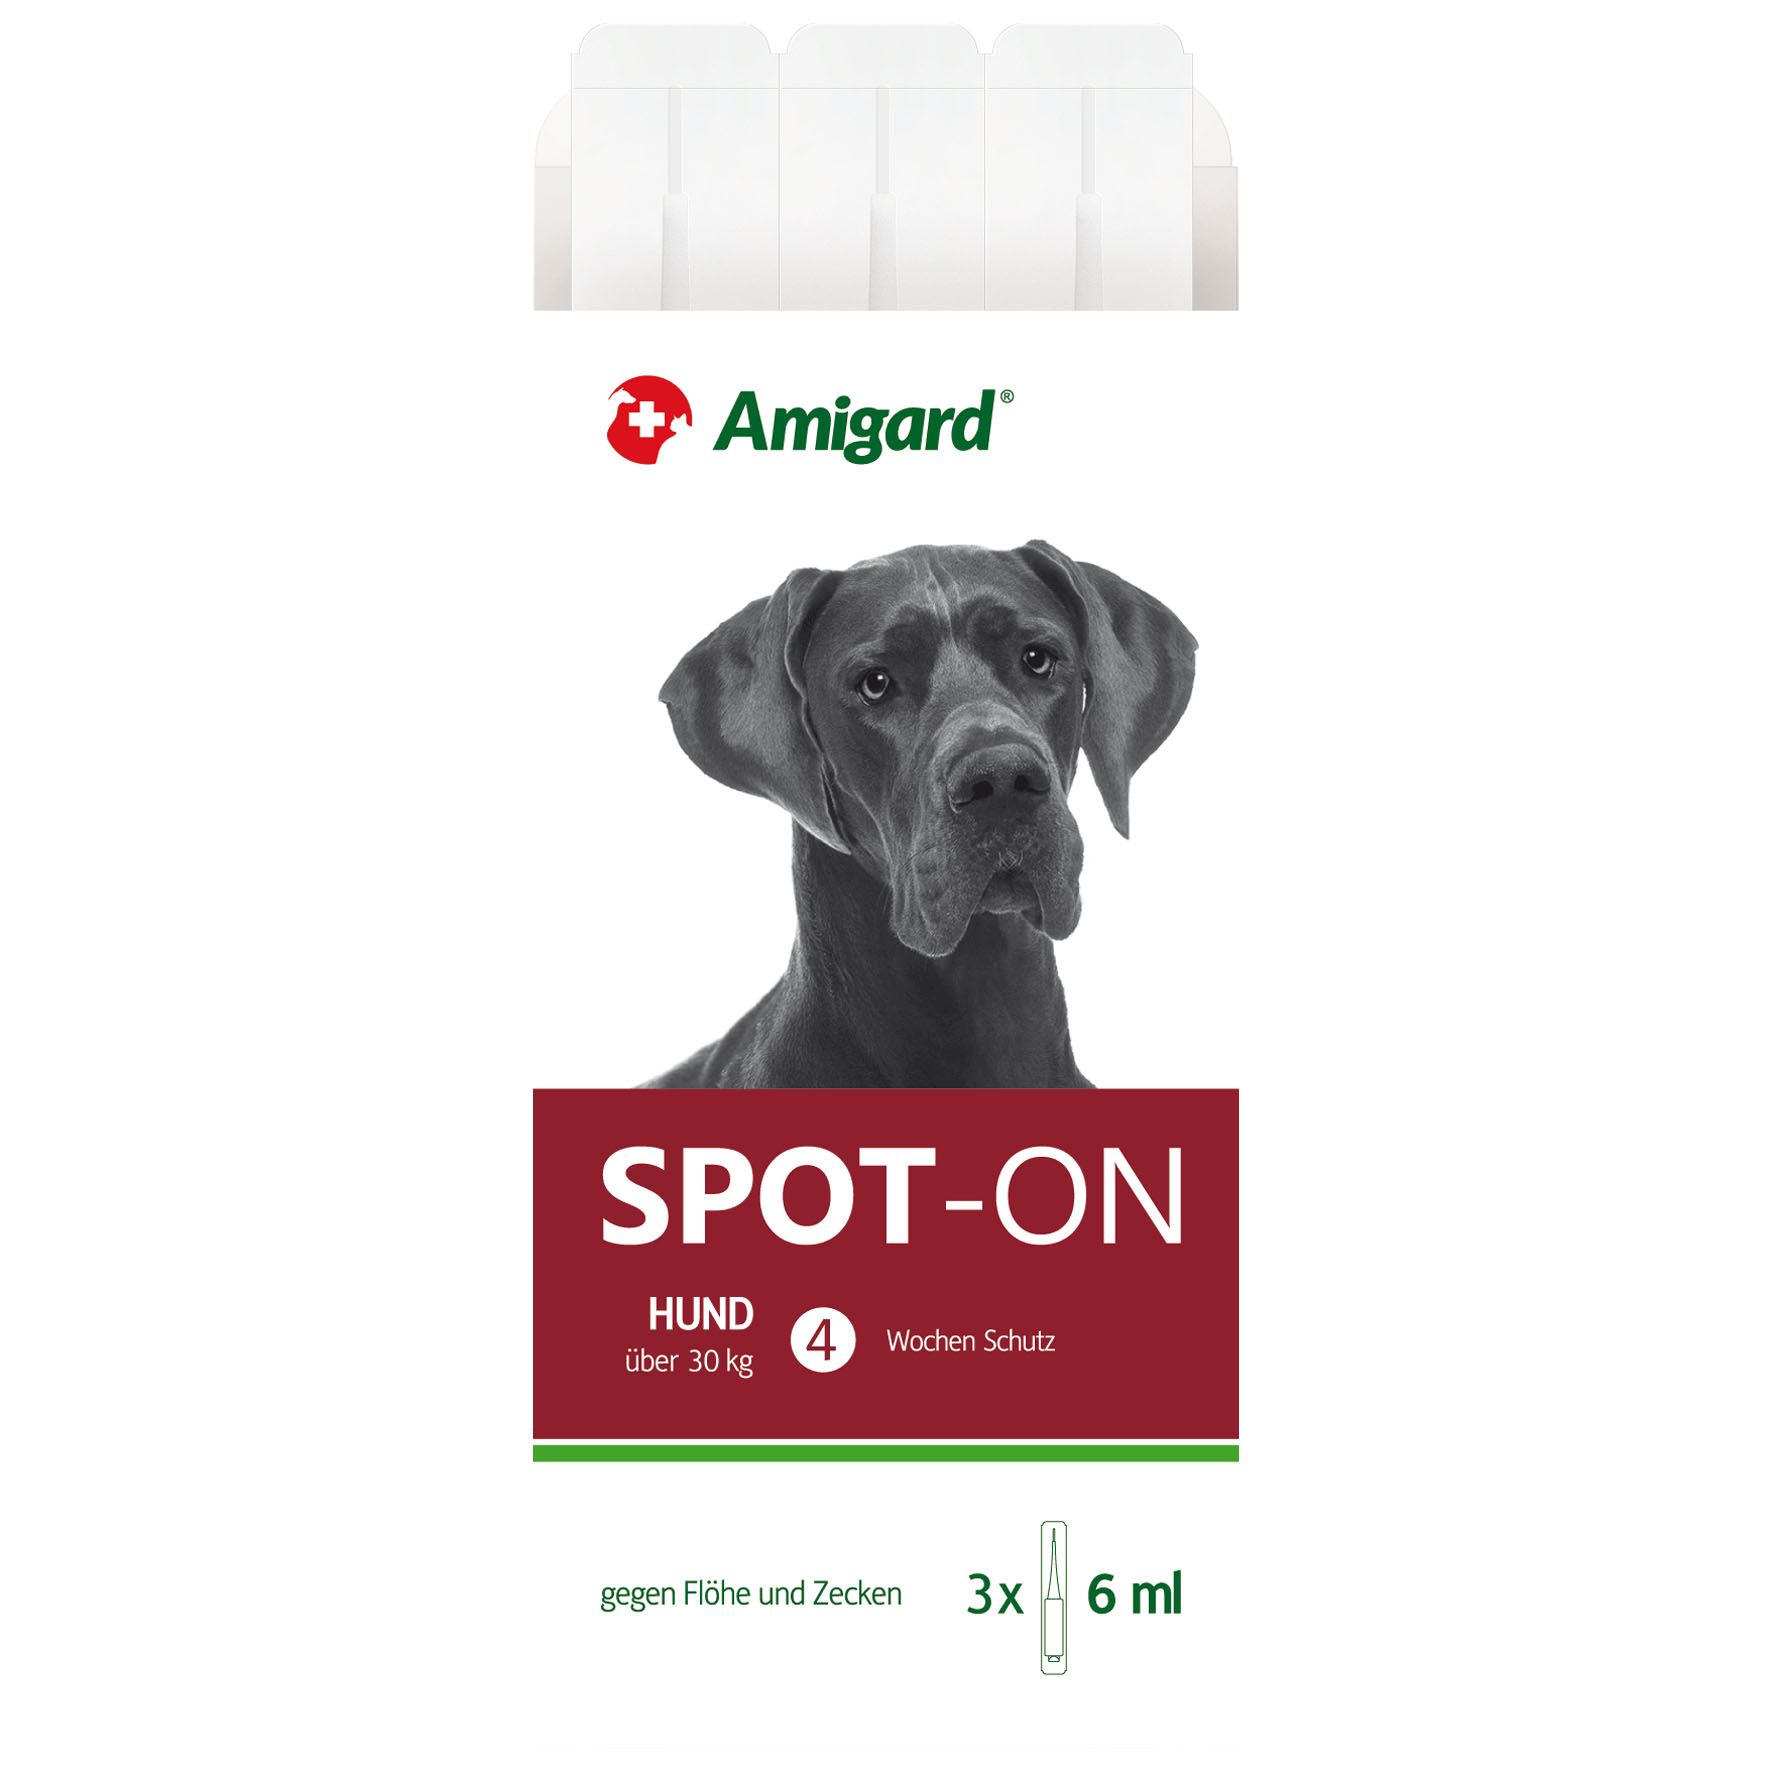 Amigard Spot-on Dog